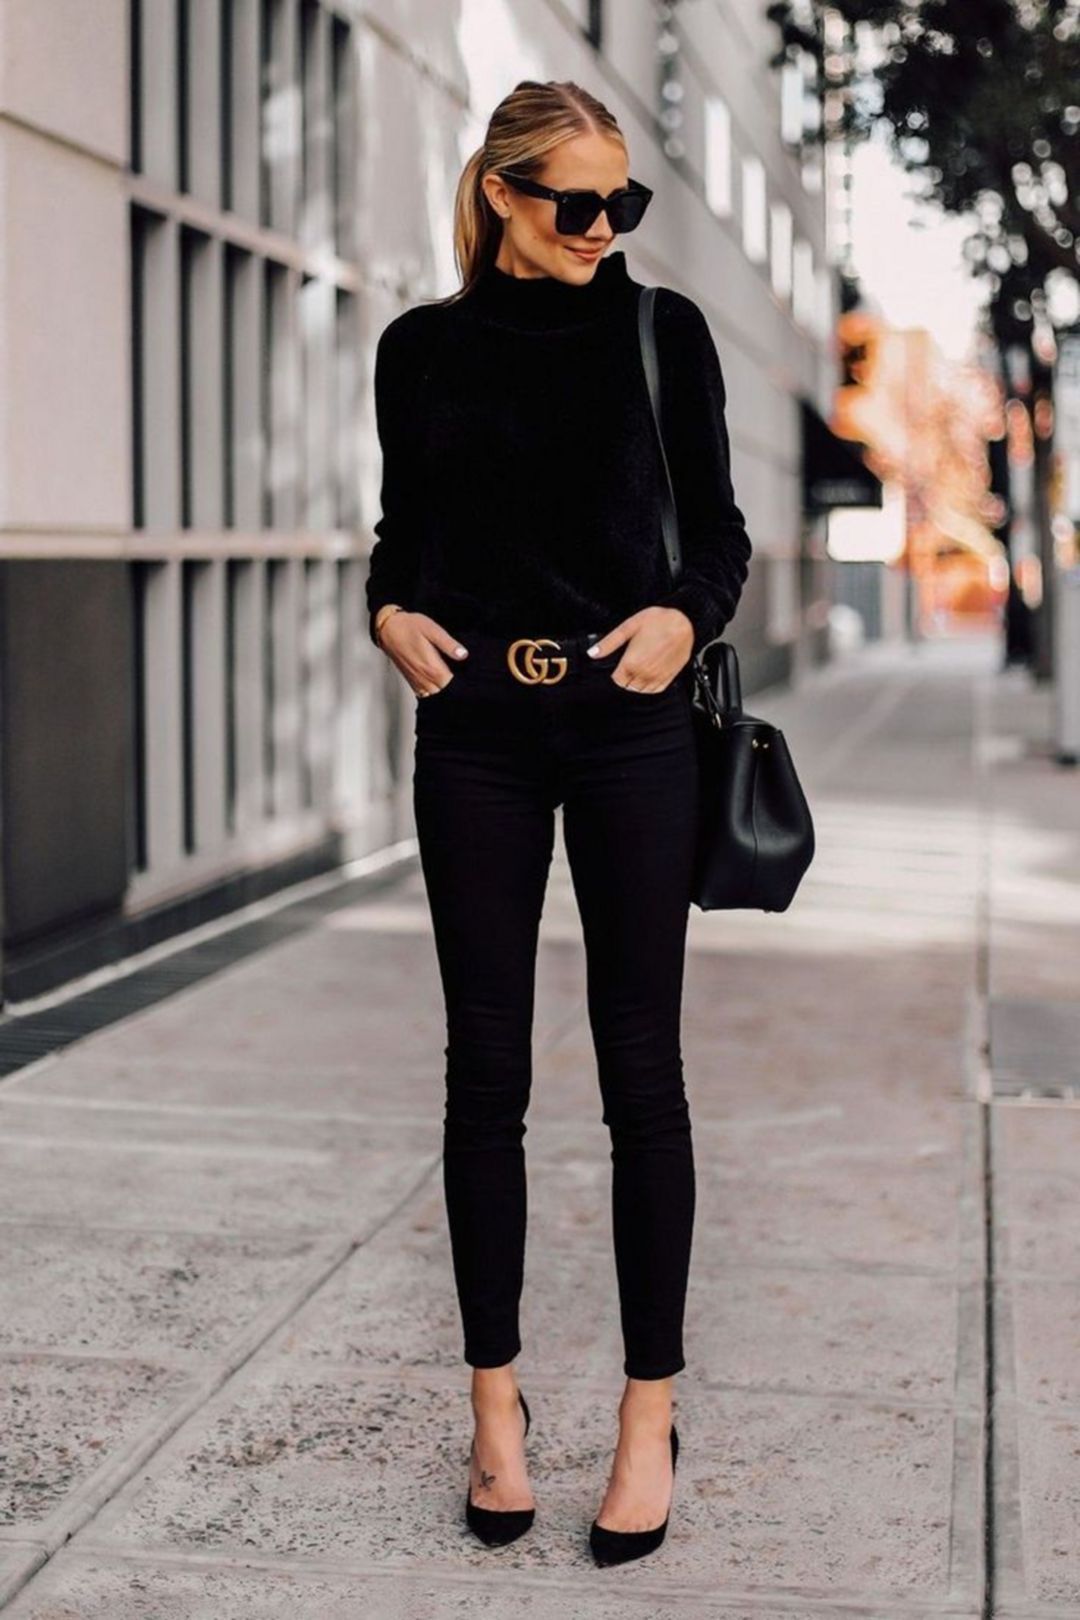 7 Cool Women's Black Jeans Ideas To Make You More Stylish - Fashions Nowadays - 7 Cool Women's Black Jeans Ideas To Make You More Stylish - Fashions Nowadays -   13 black style Feminino ideas